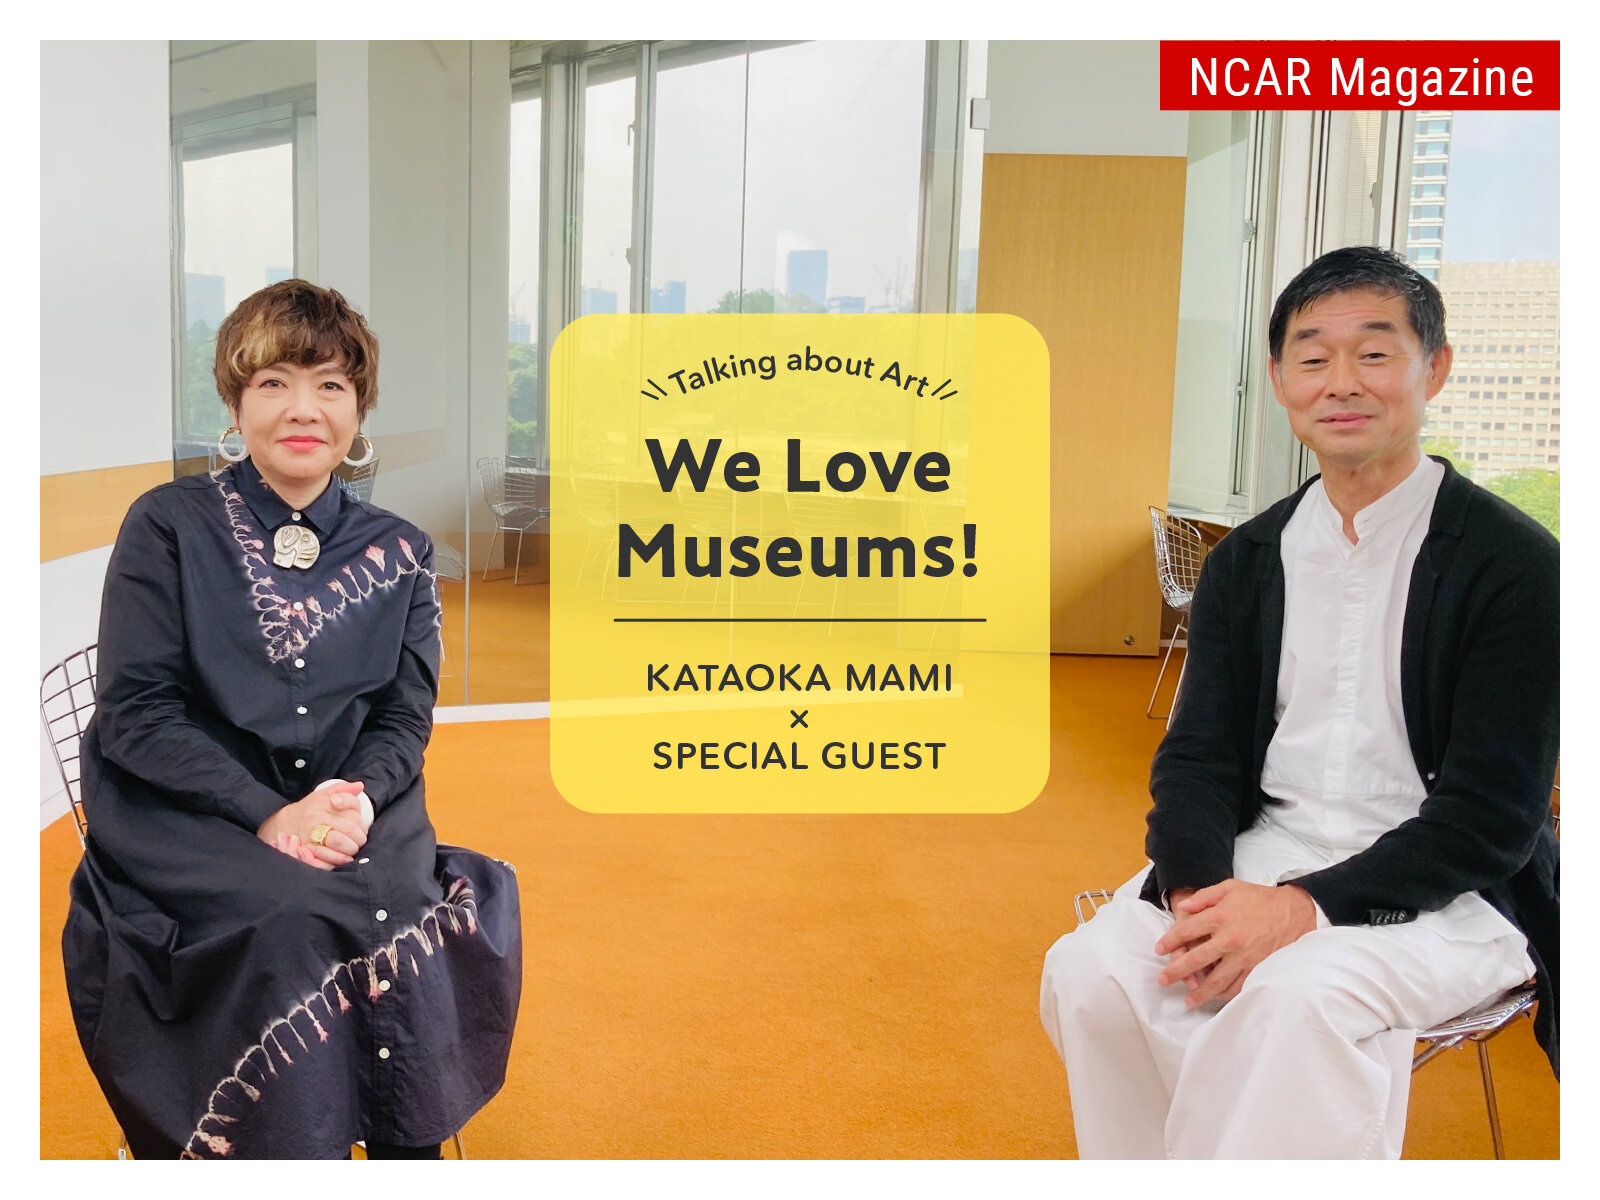 [Video] We Love Museums!: Talking about Art　KATAOKA MAMI × SPECIAL GUEST　Episode 1: MINAGAWA AKIRA

